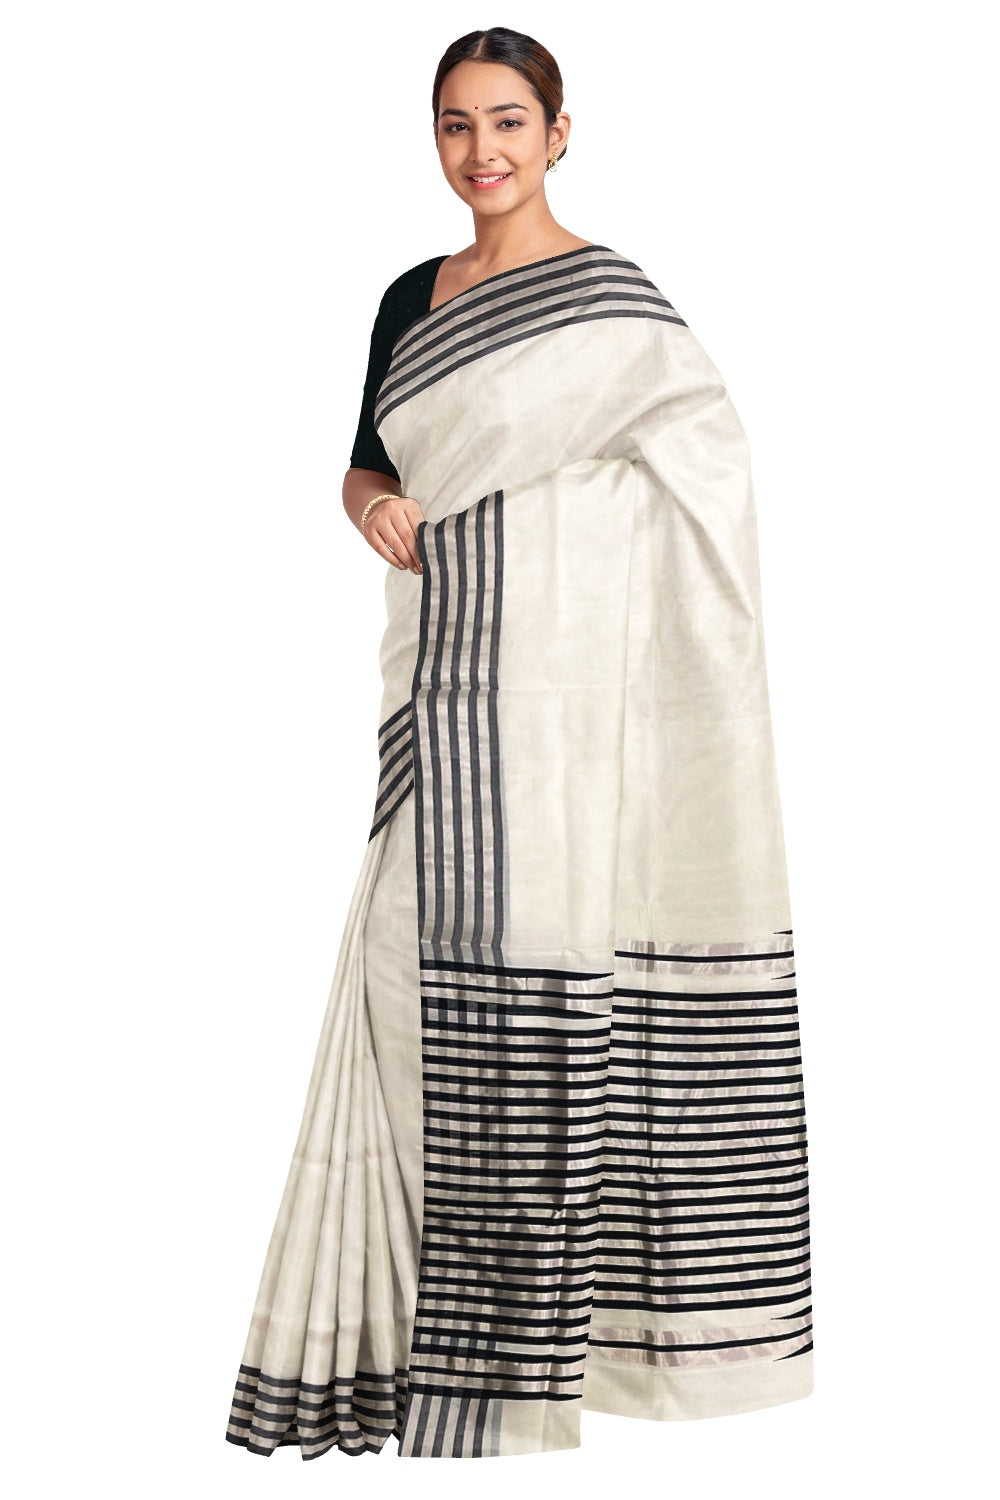 Southloom Premium Handloom Silver Kasavu and Black Katti Kara Saree with Lines Design 15 Inch Pallu